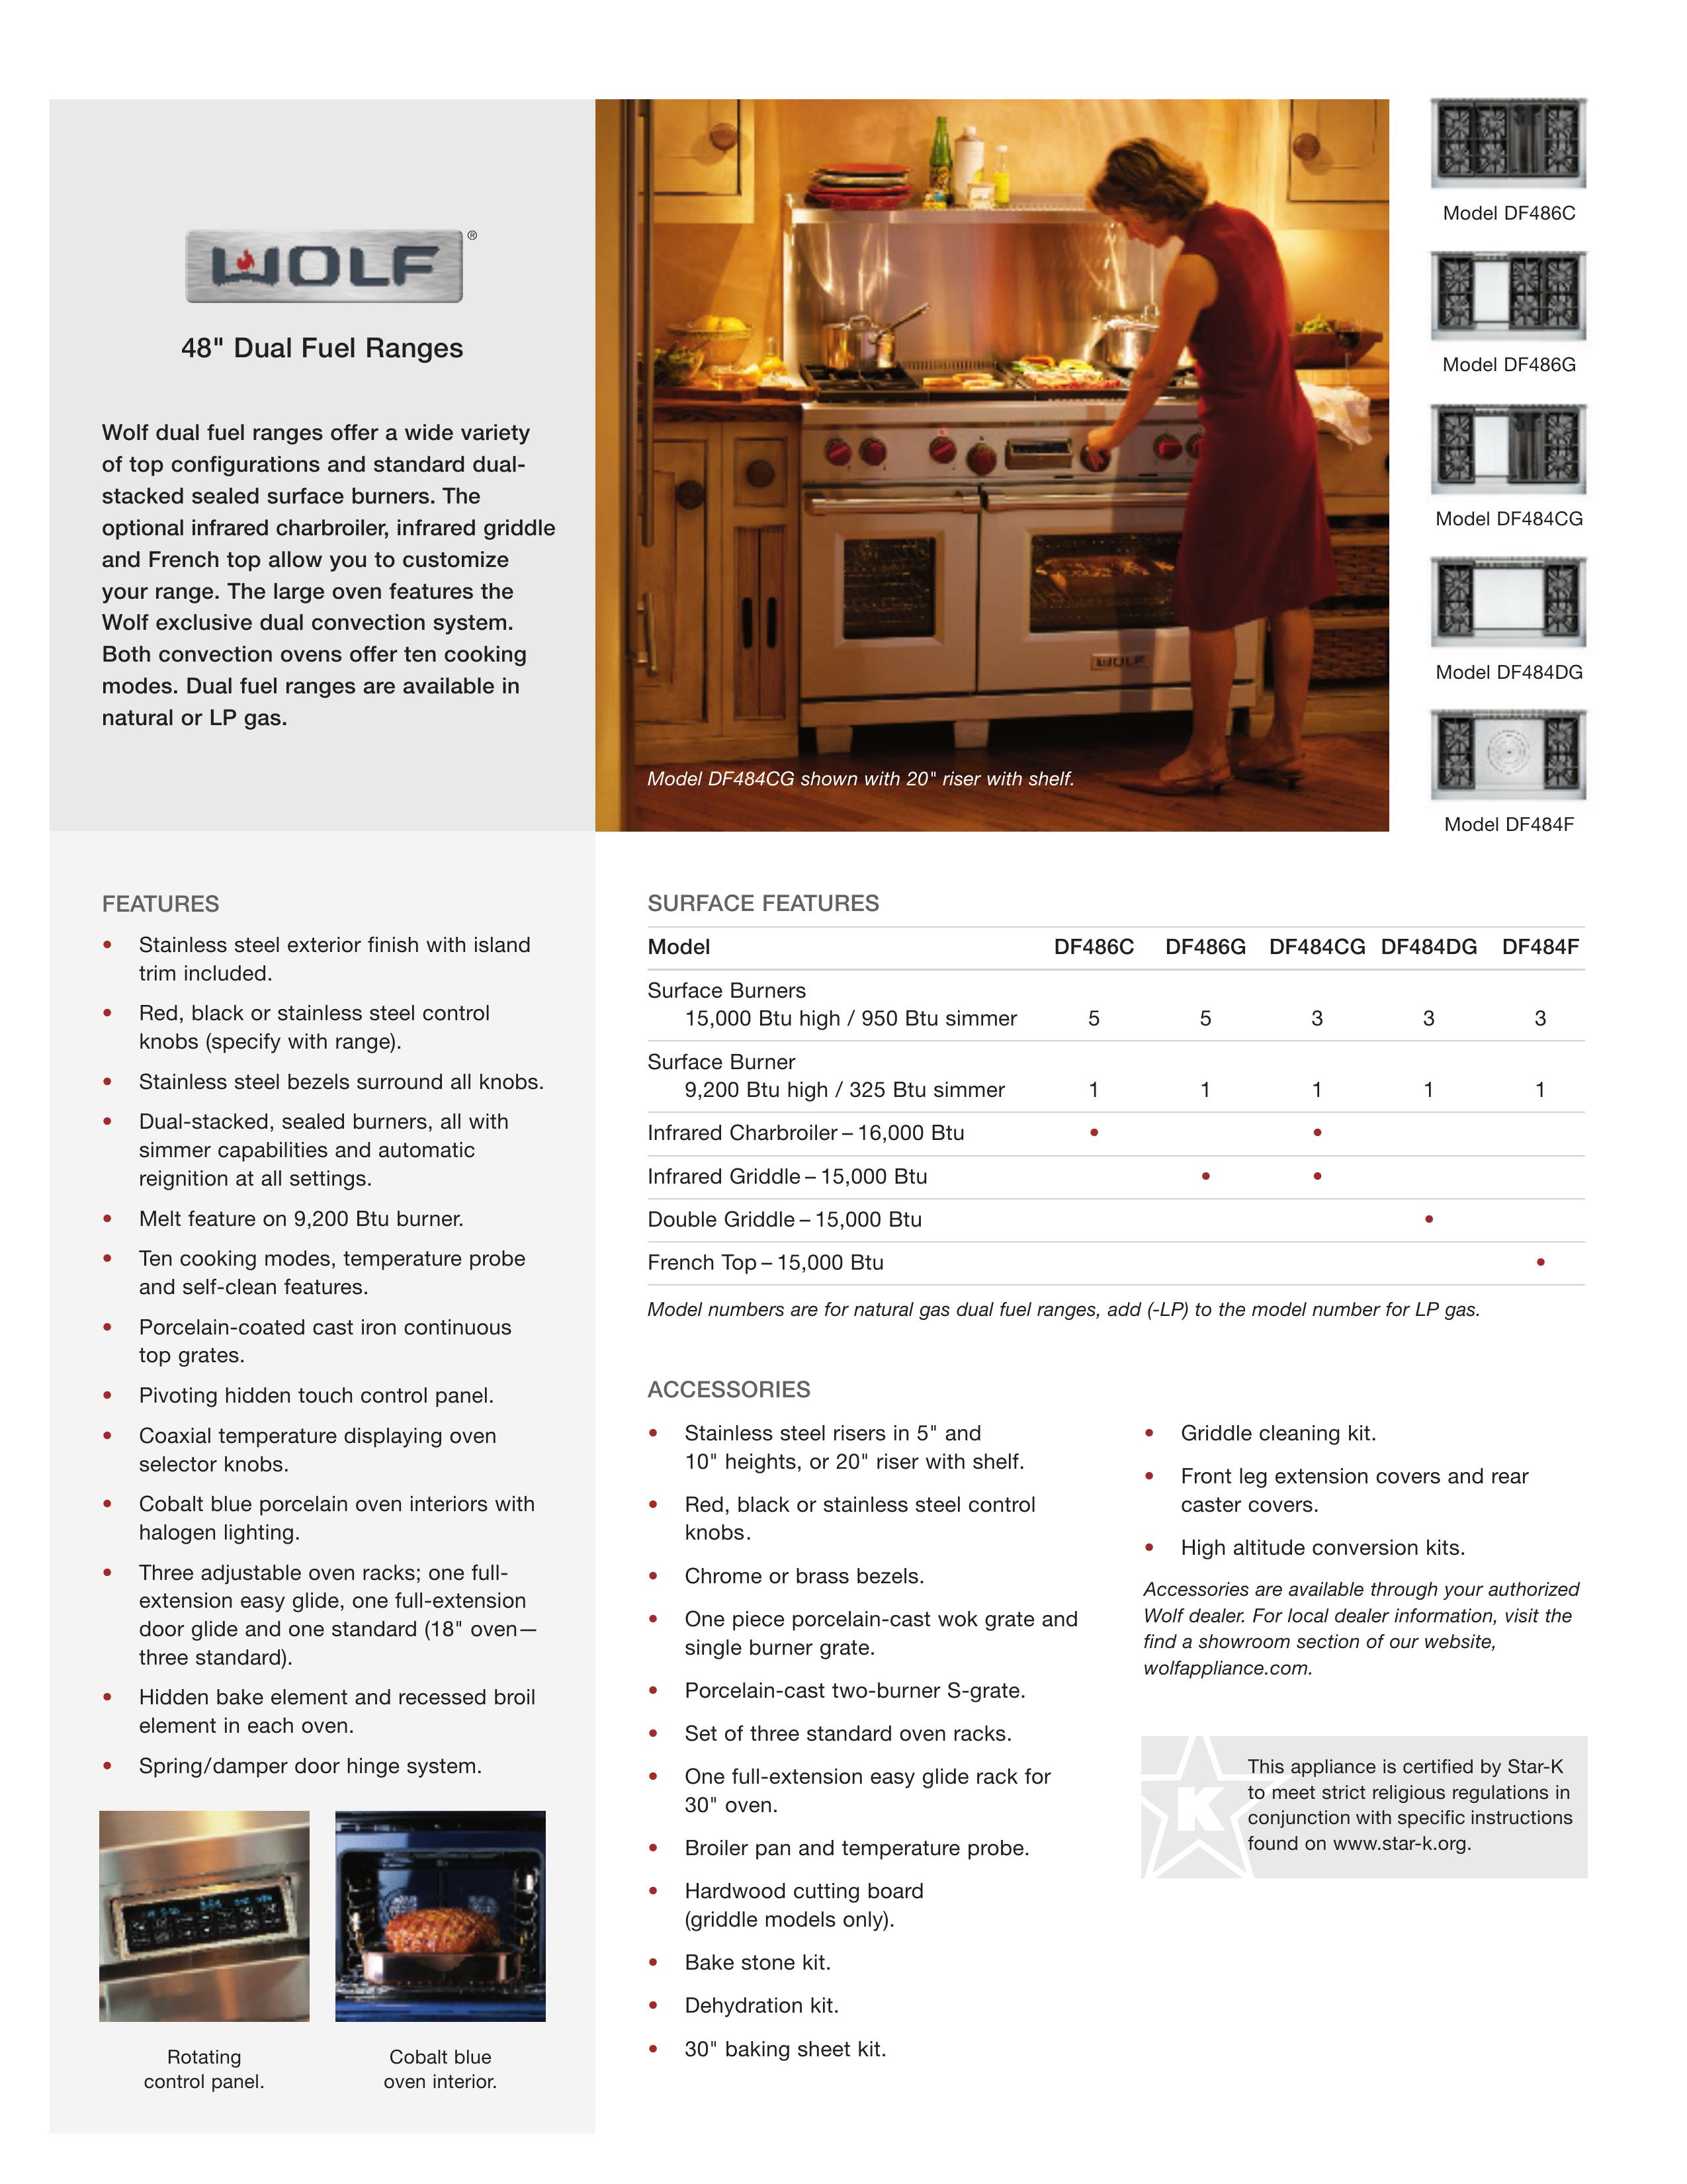 Wolf Appliance Company DF486G Range User Manual